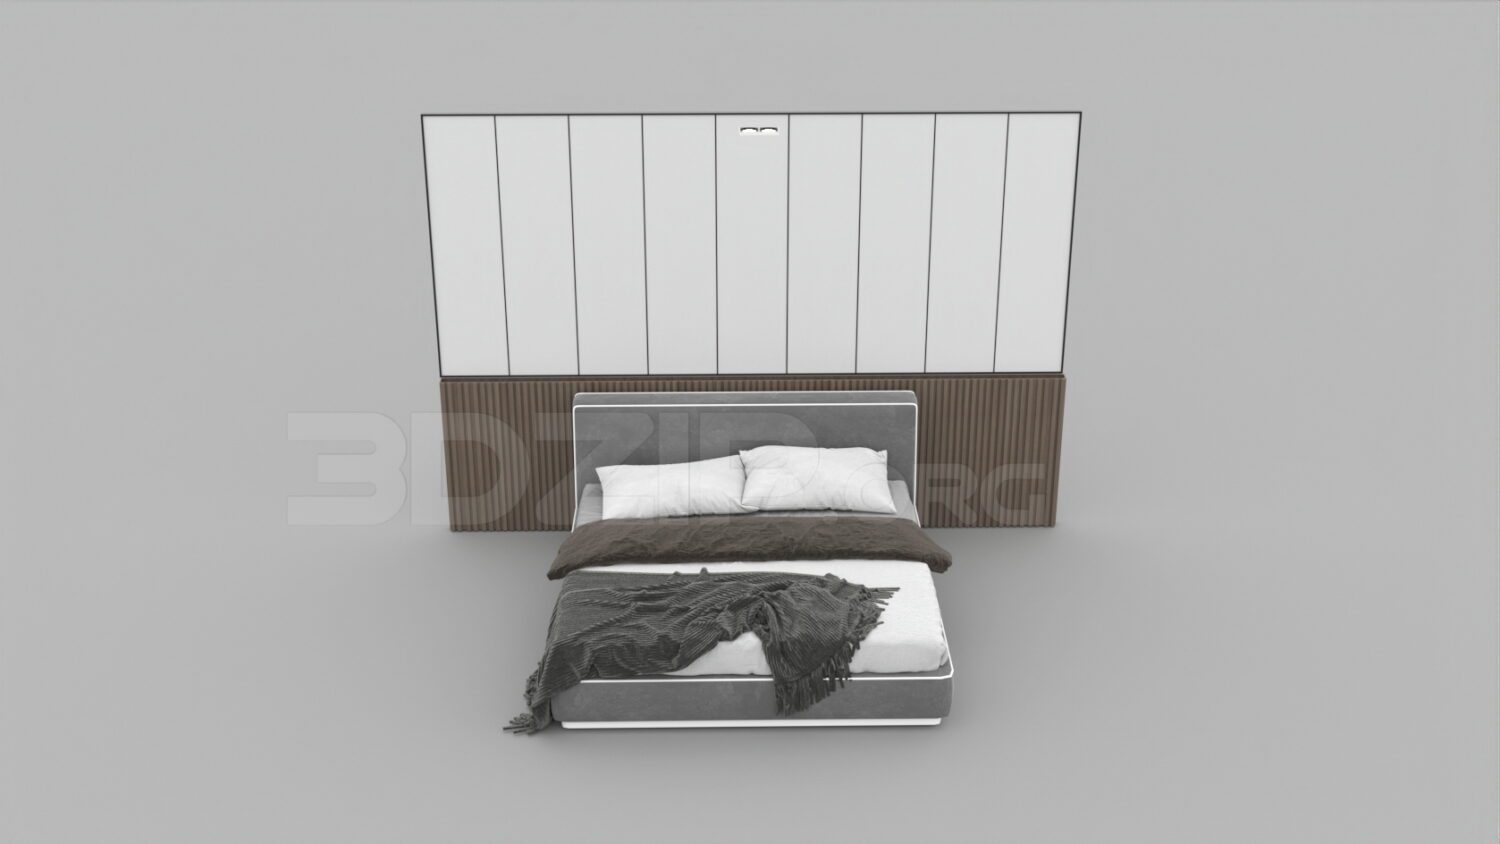 2975. Free 3D Bed Model Download